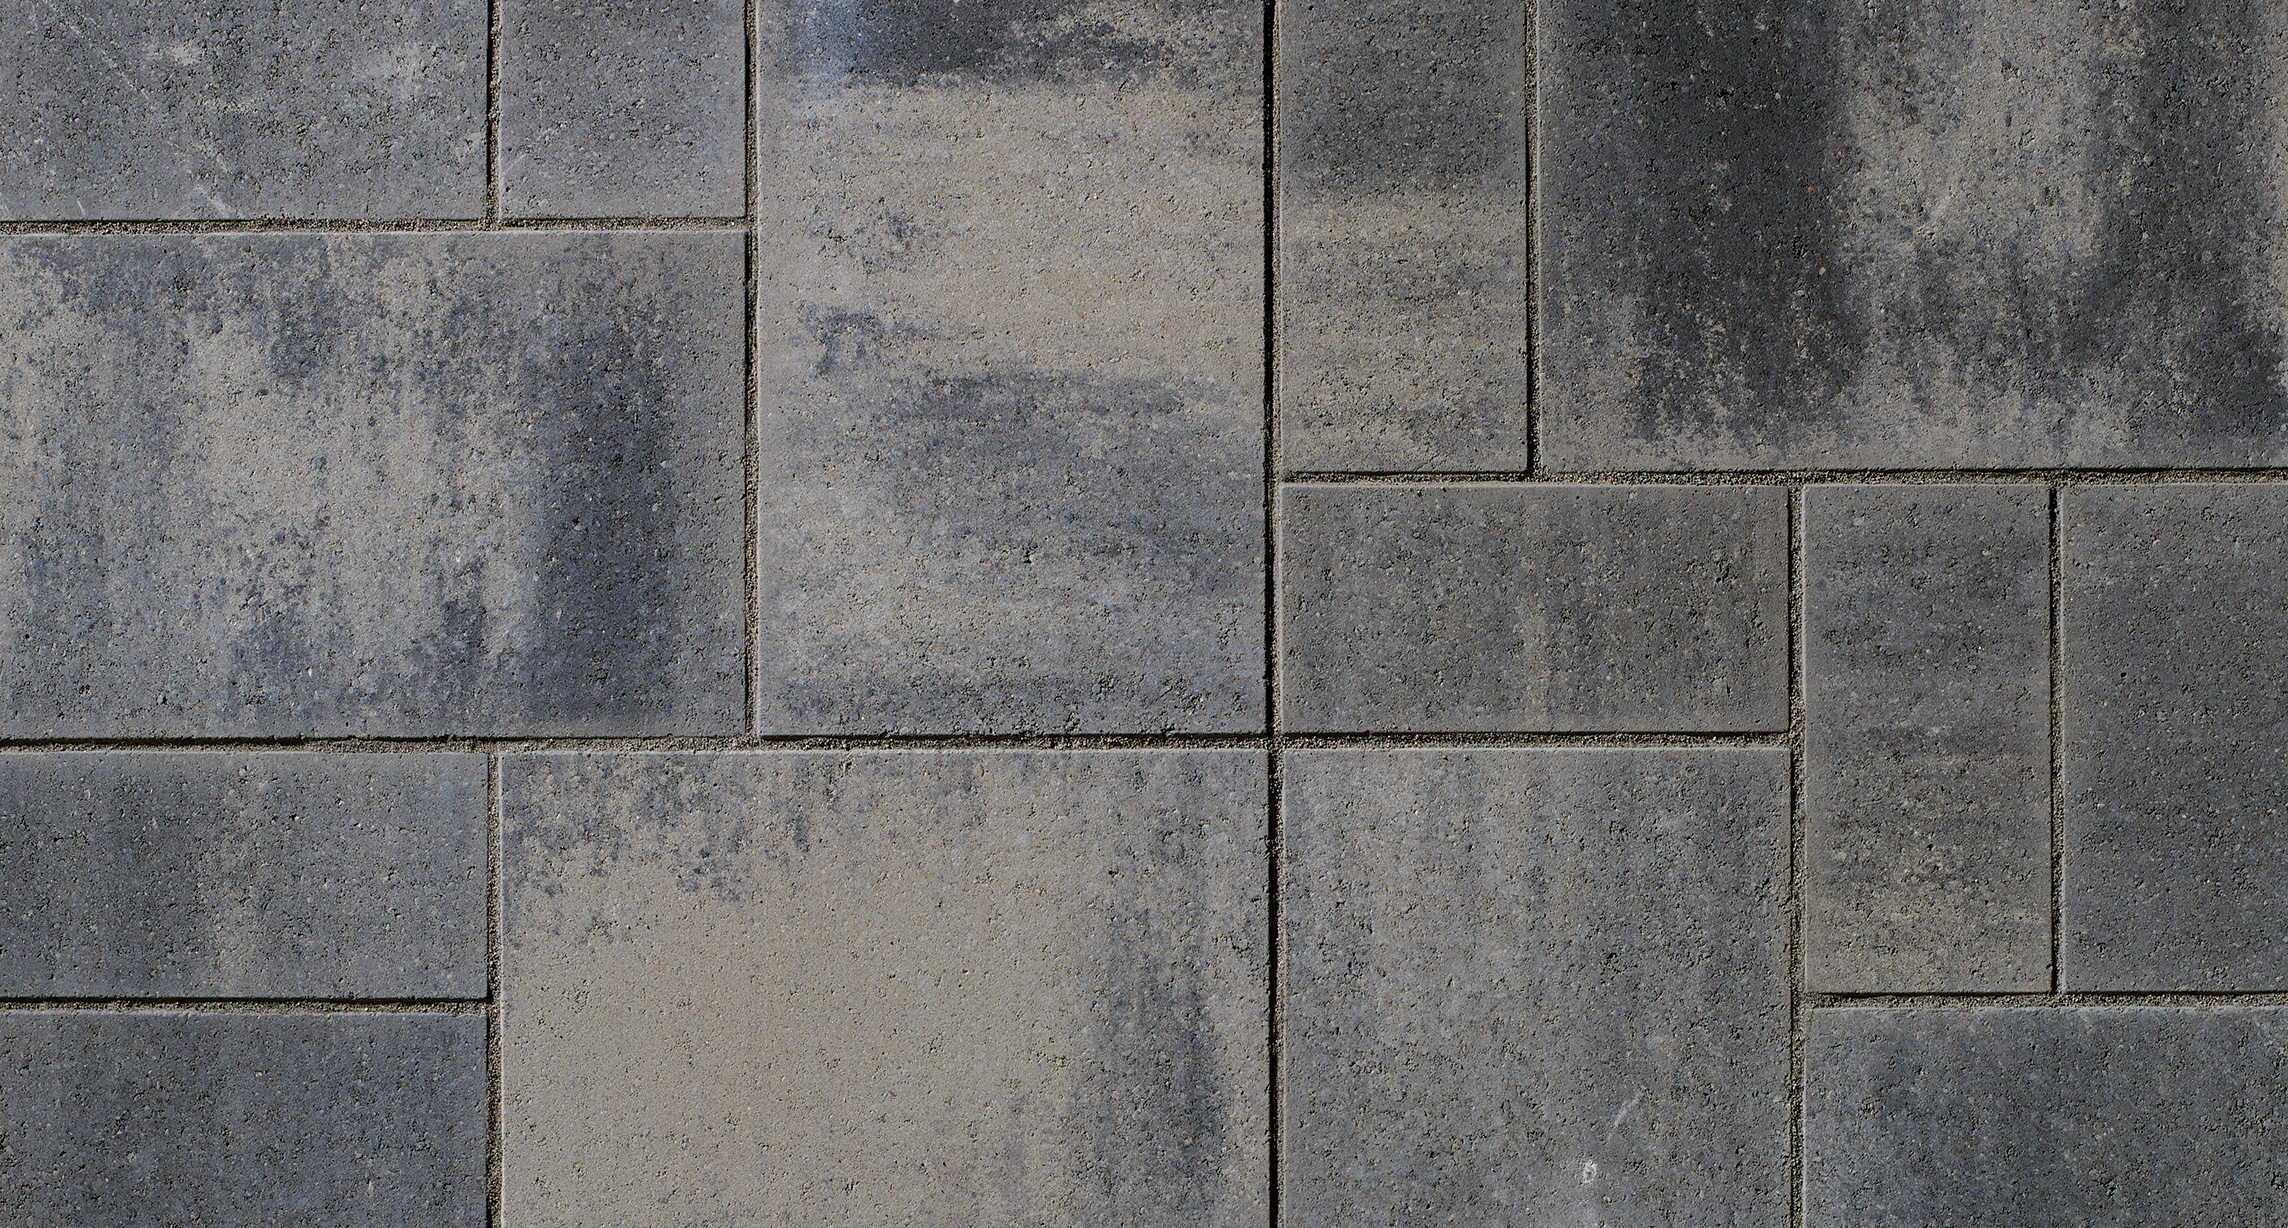 Image Permacon Melville 80 Concrete Pavers in Range Newport grey